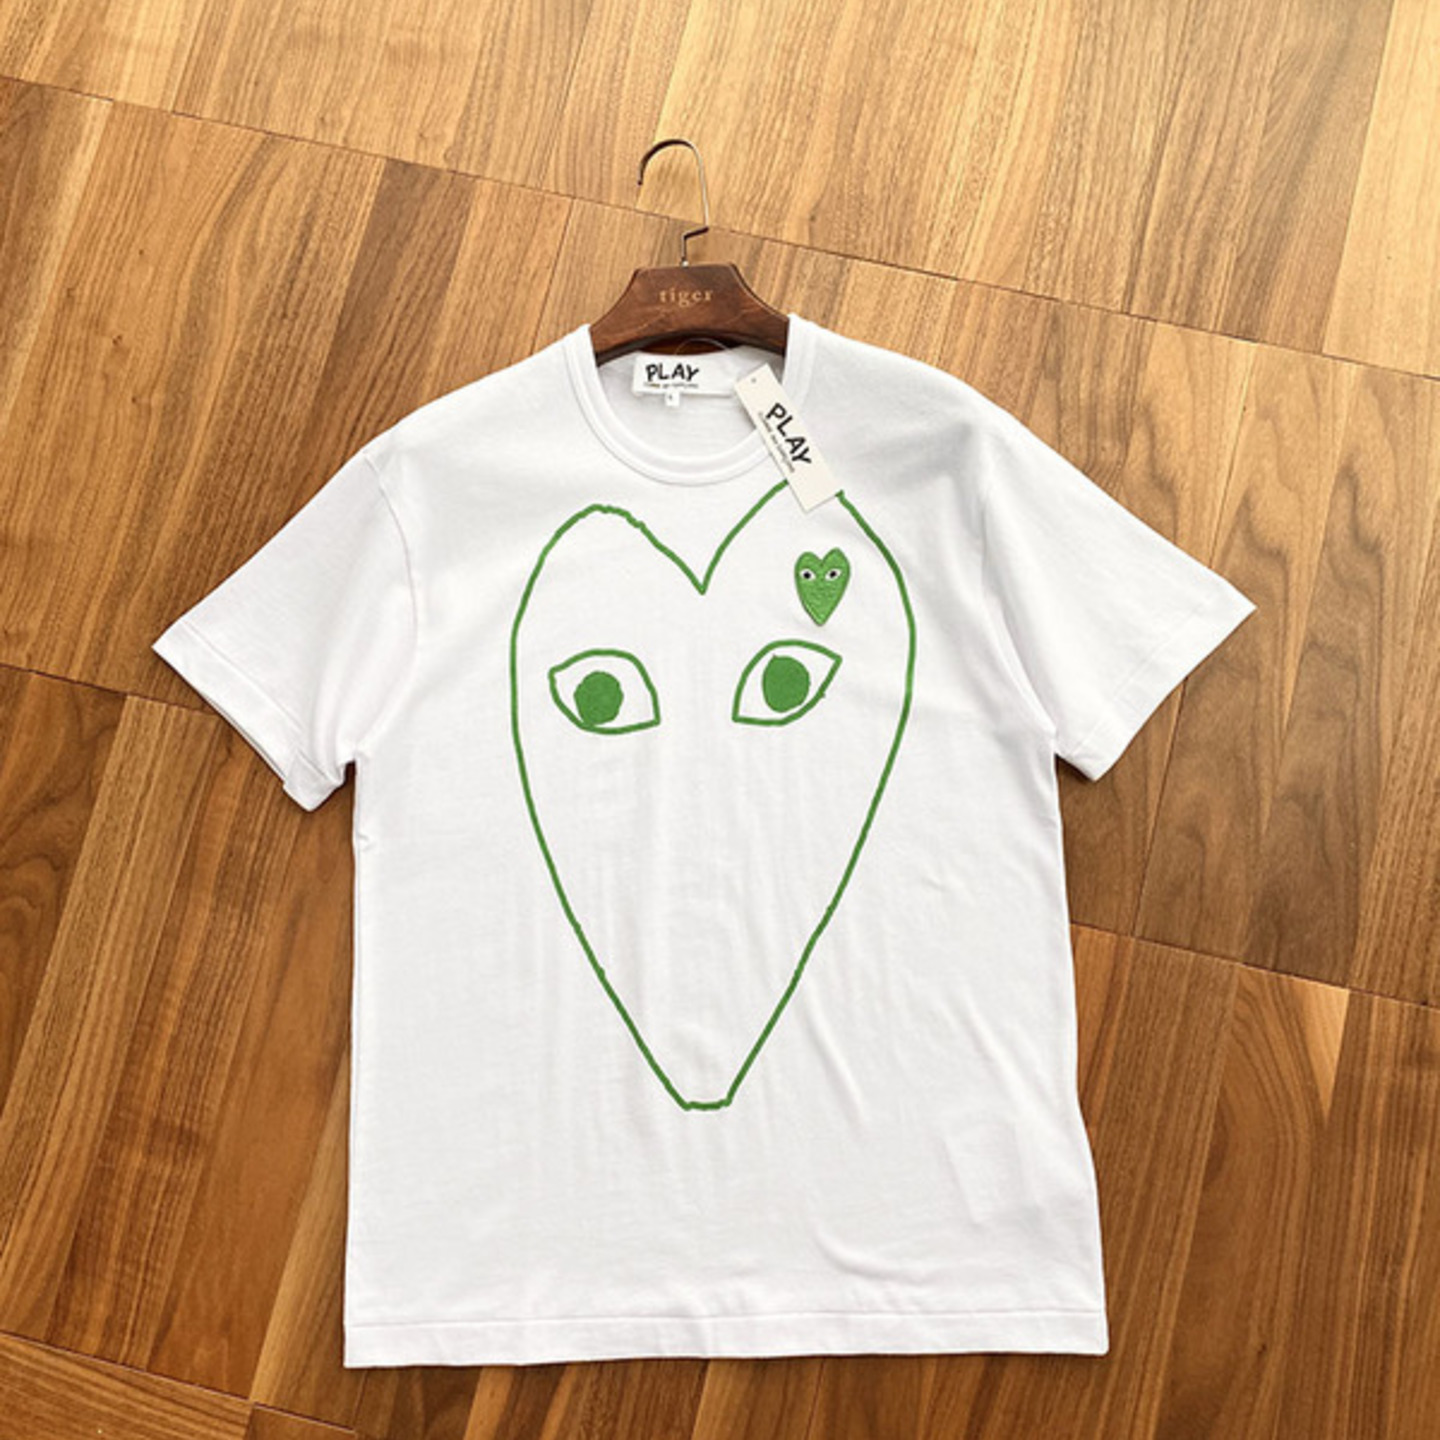 Comme des Garçons large heart logo T-shirt